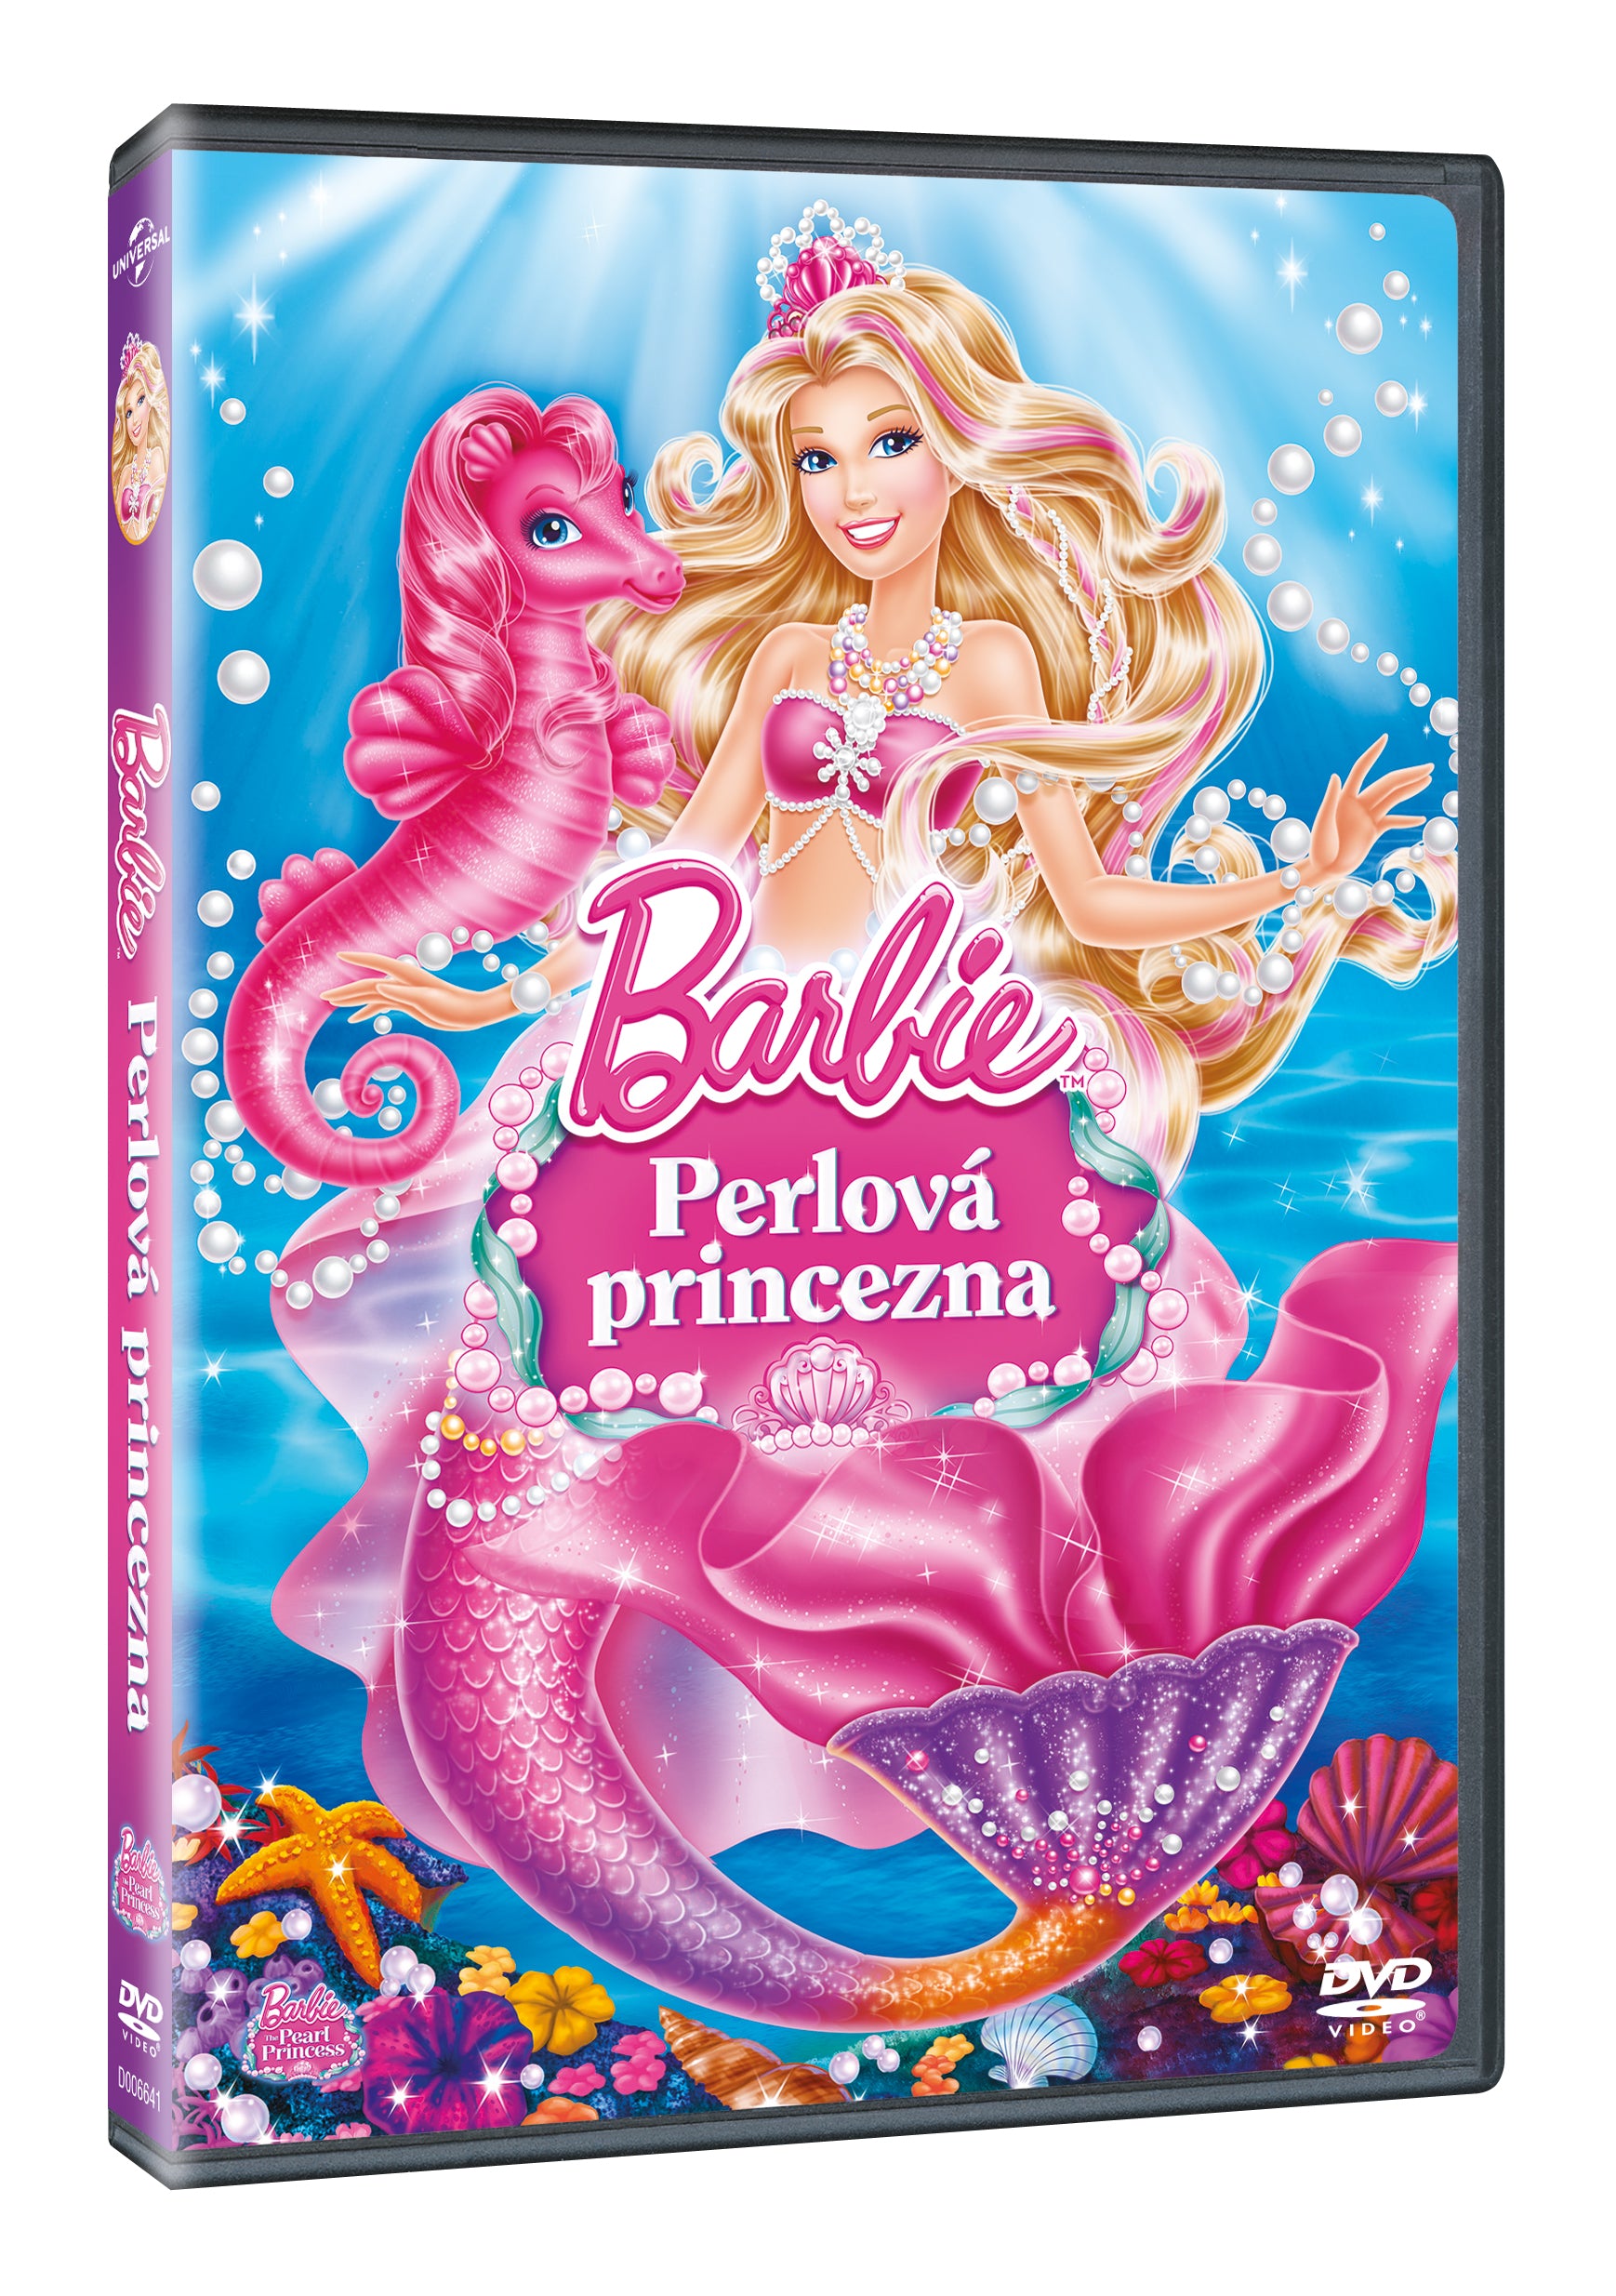 Barbie Perlova princezna / Barbie – The Pearl Princess DVD